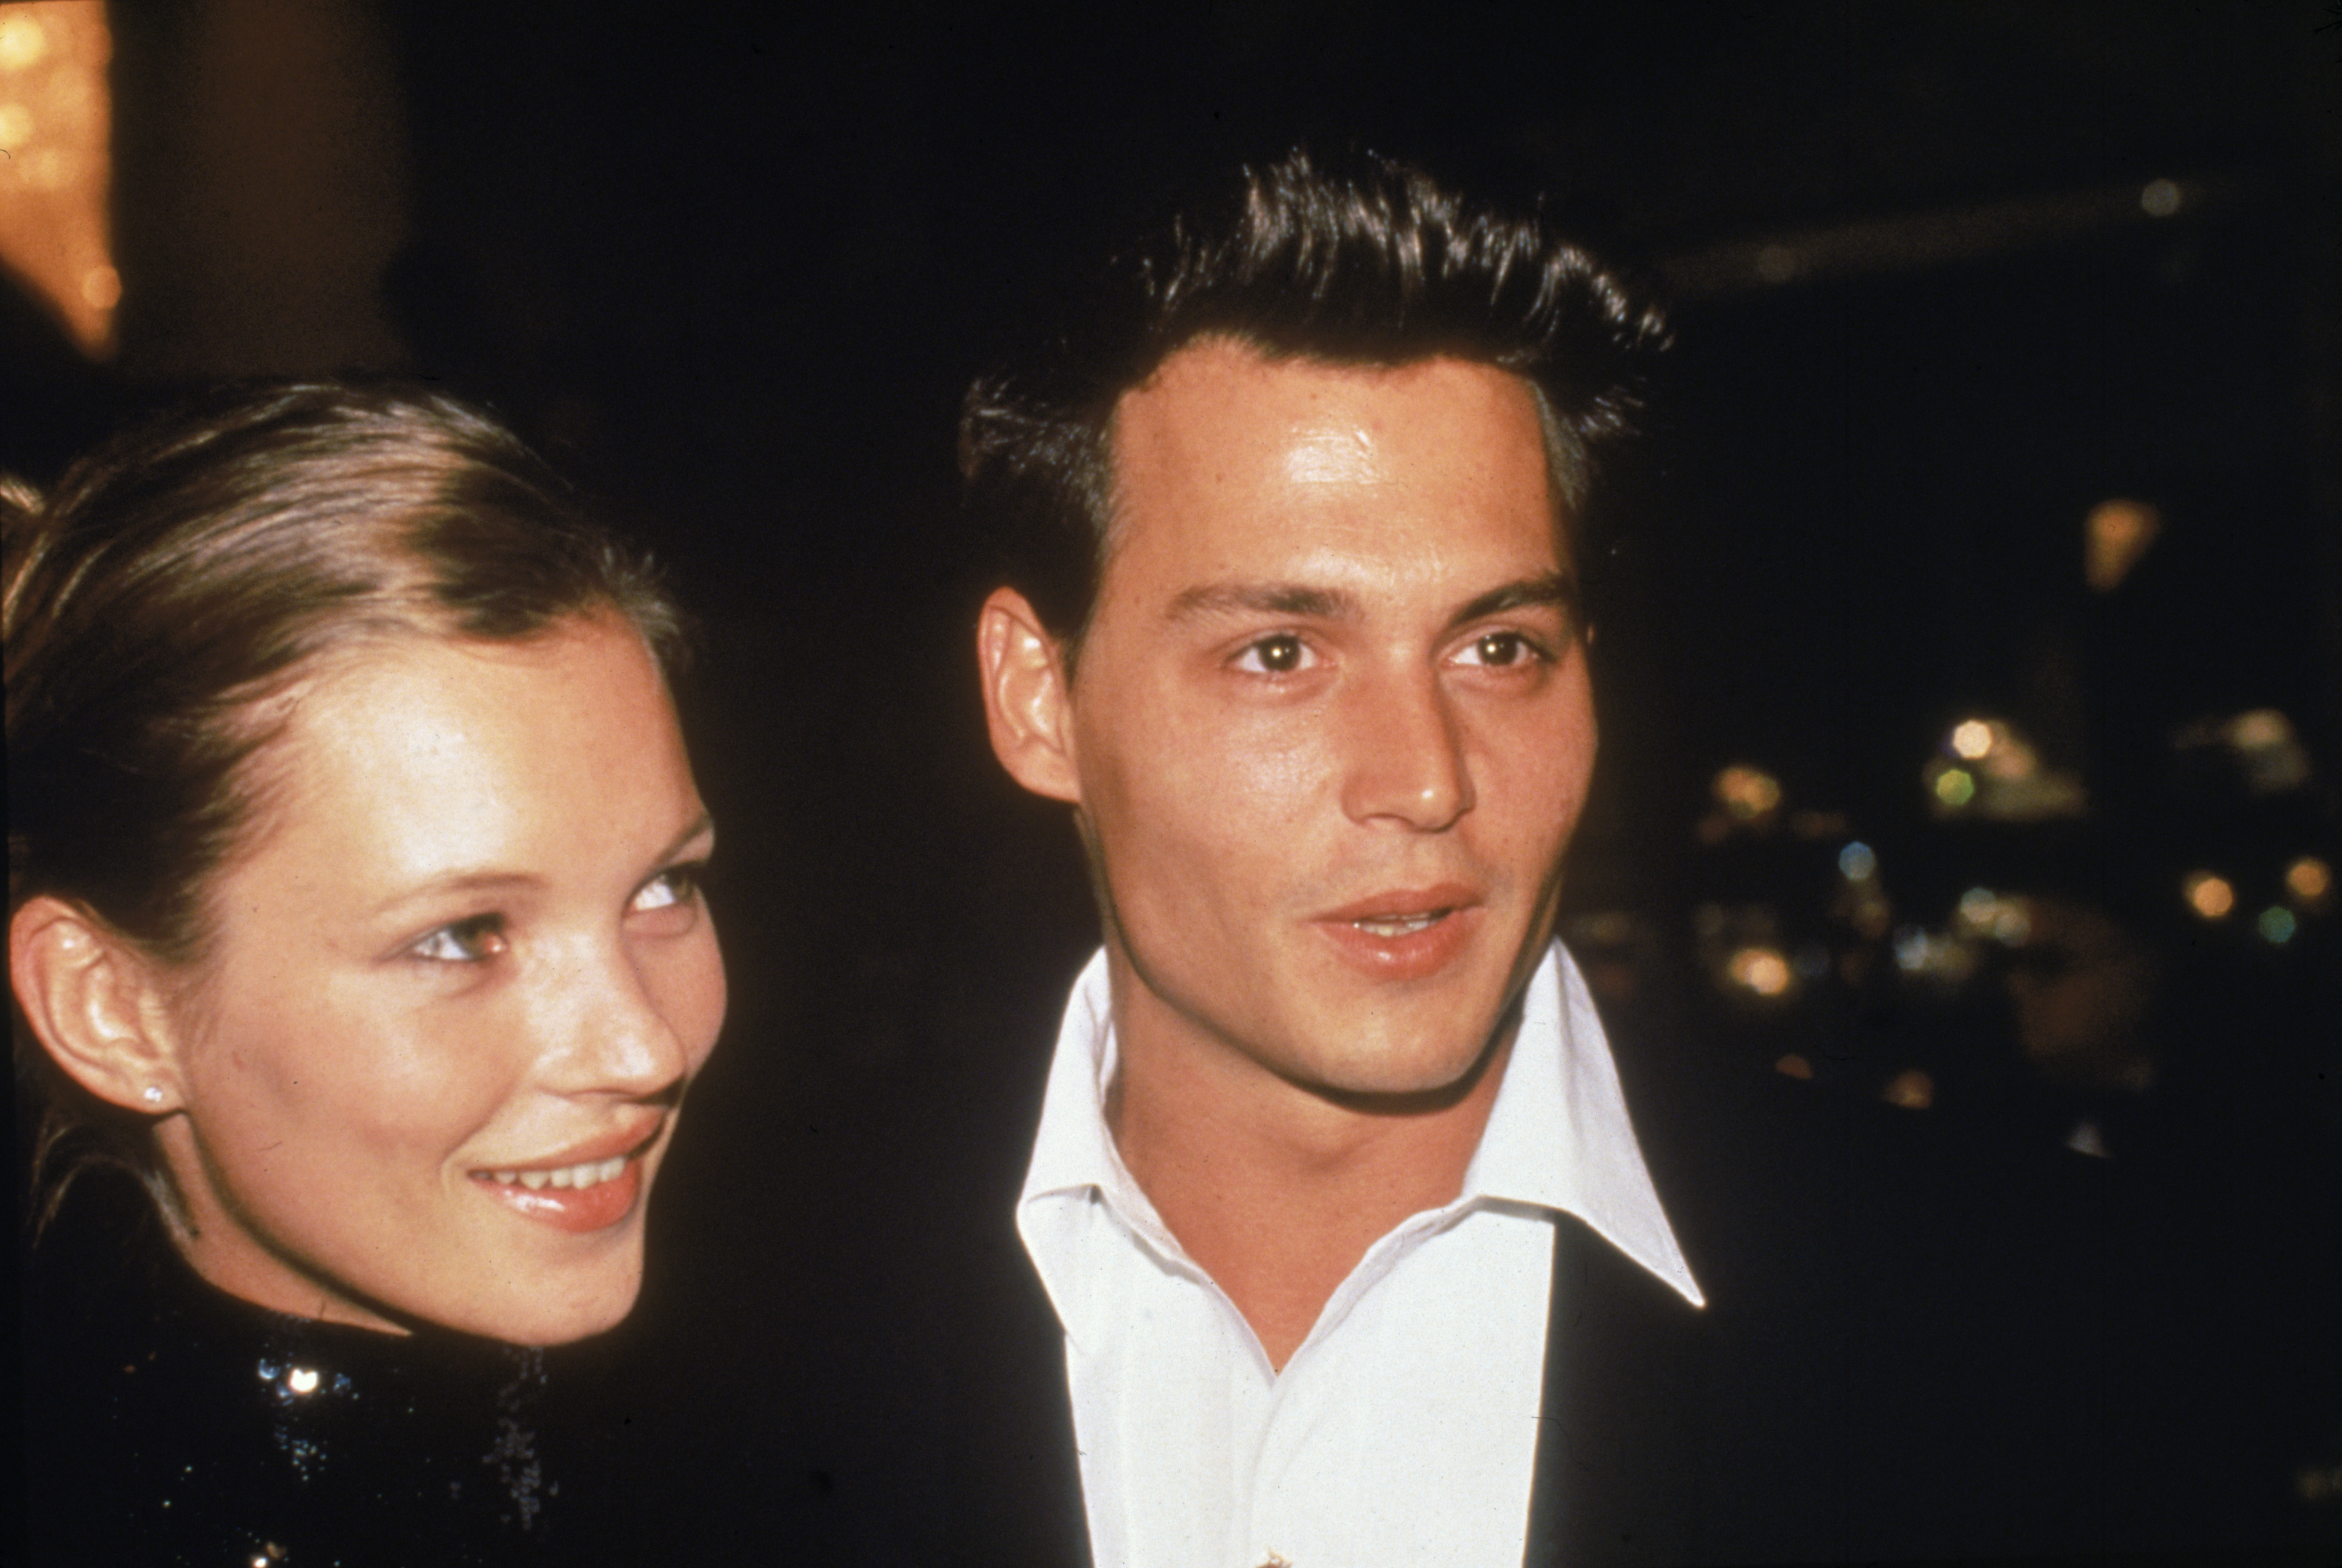 Kate Moss und Johnny Depp bei den 52nd Annual Golden Globe Awards in Beverly Hills, Kalifornien am 21. Januar 1995 | Quelle: Getty Images